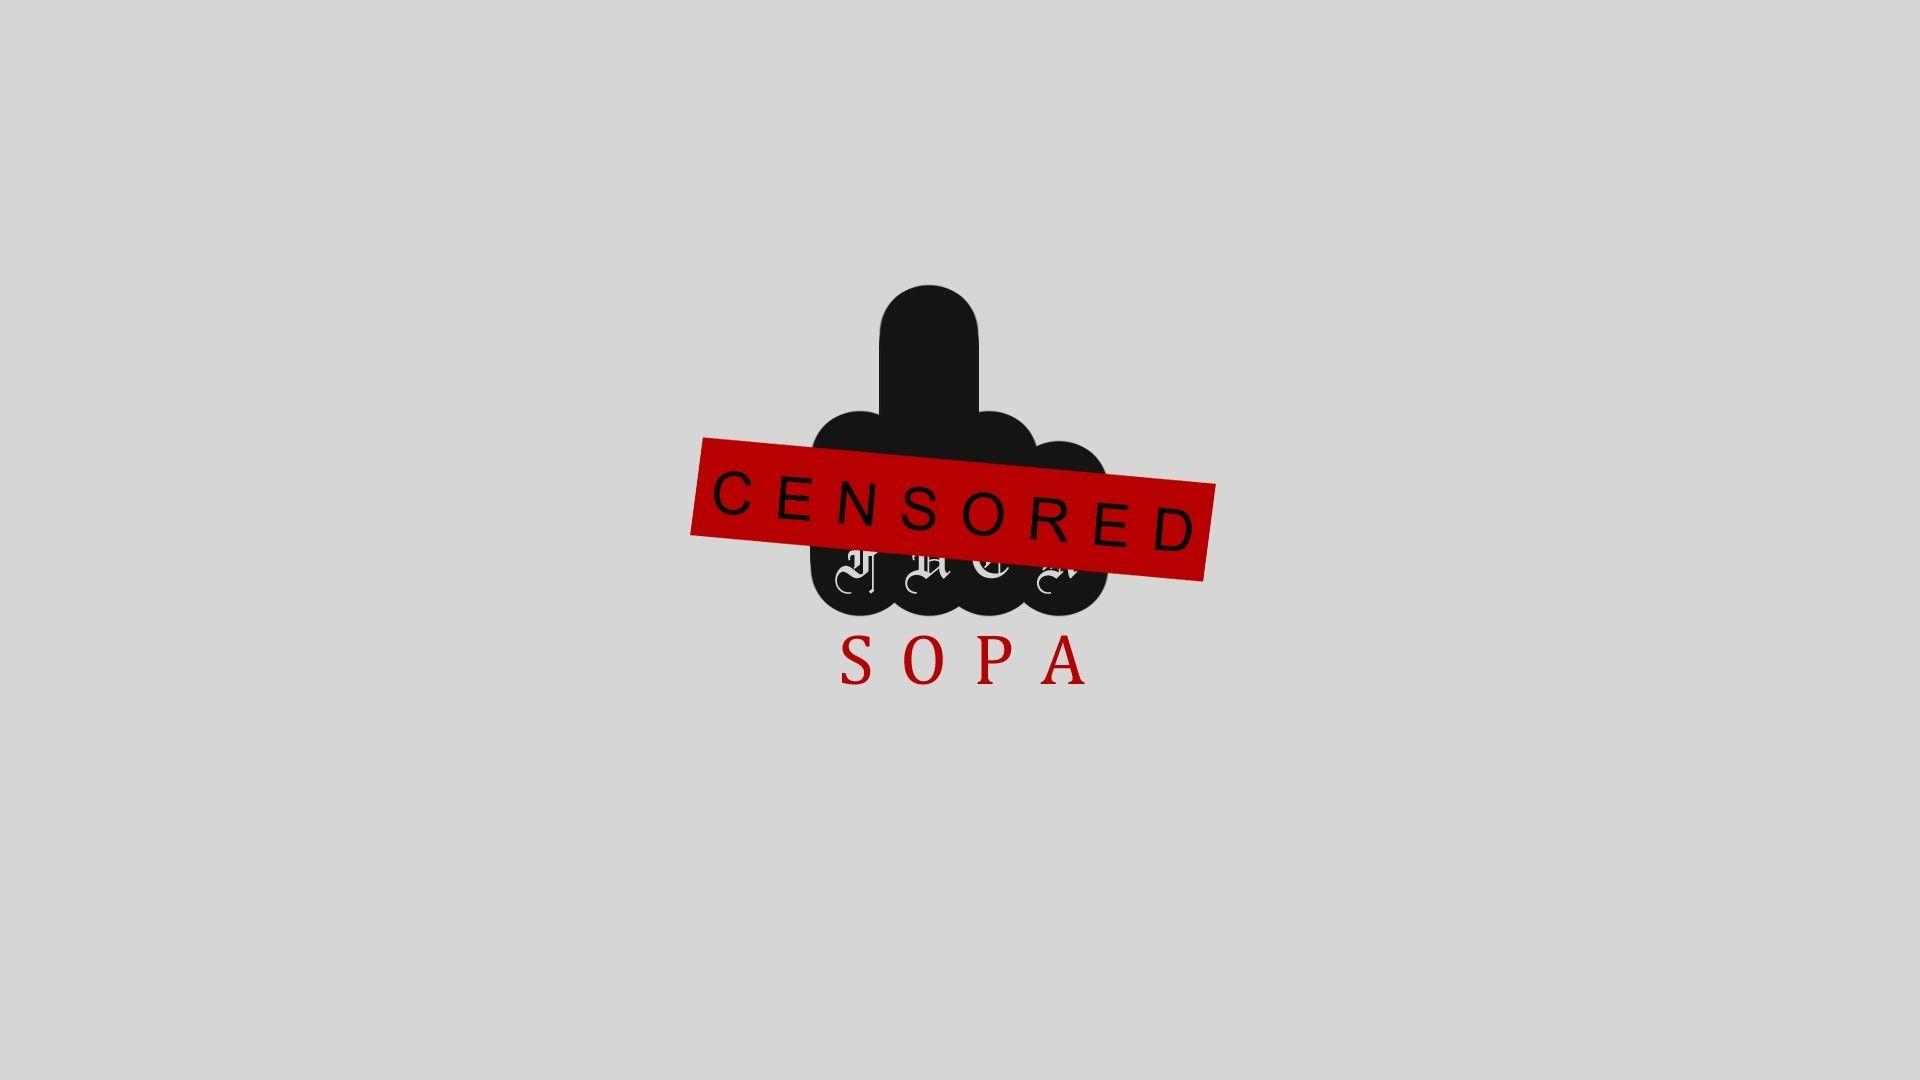 Sopa censored protest simple background wallpaper